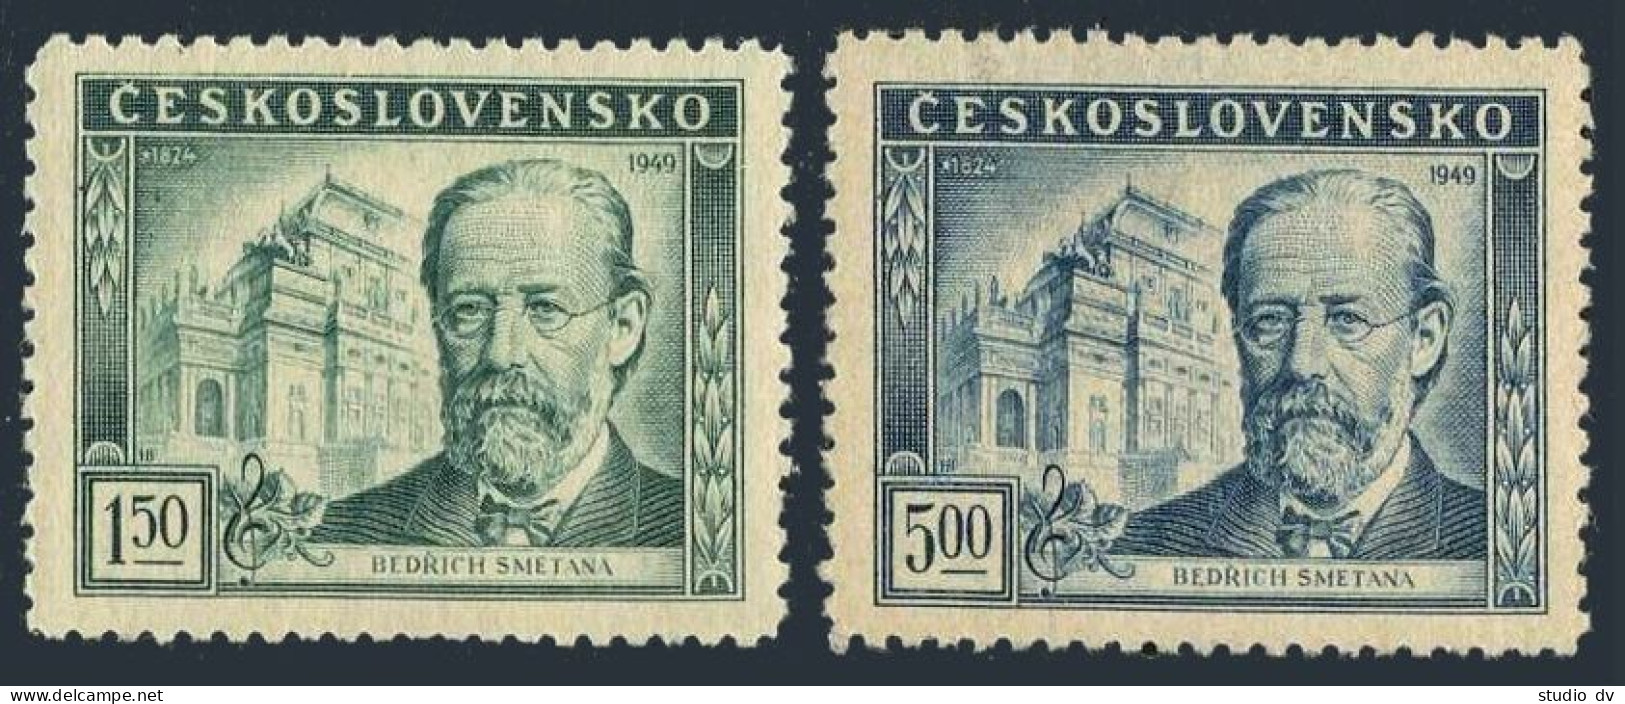 Czechoslovakia 386-387, MNH. Michel 578-579. Bedrich Smetana, Composer, 1949. - Nuevos